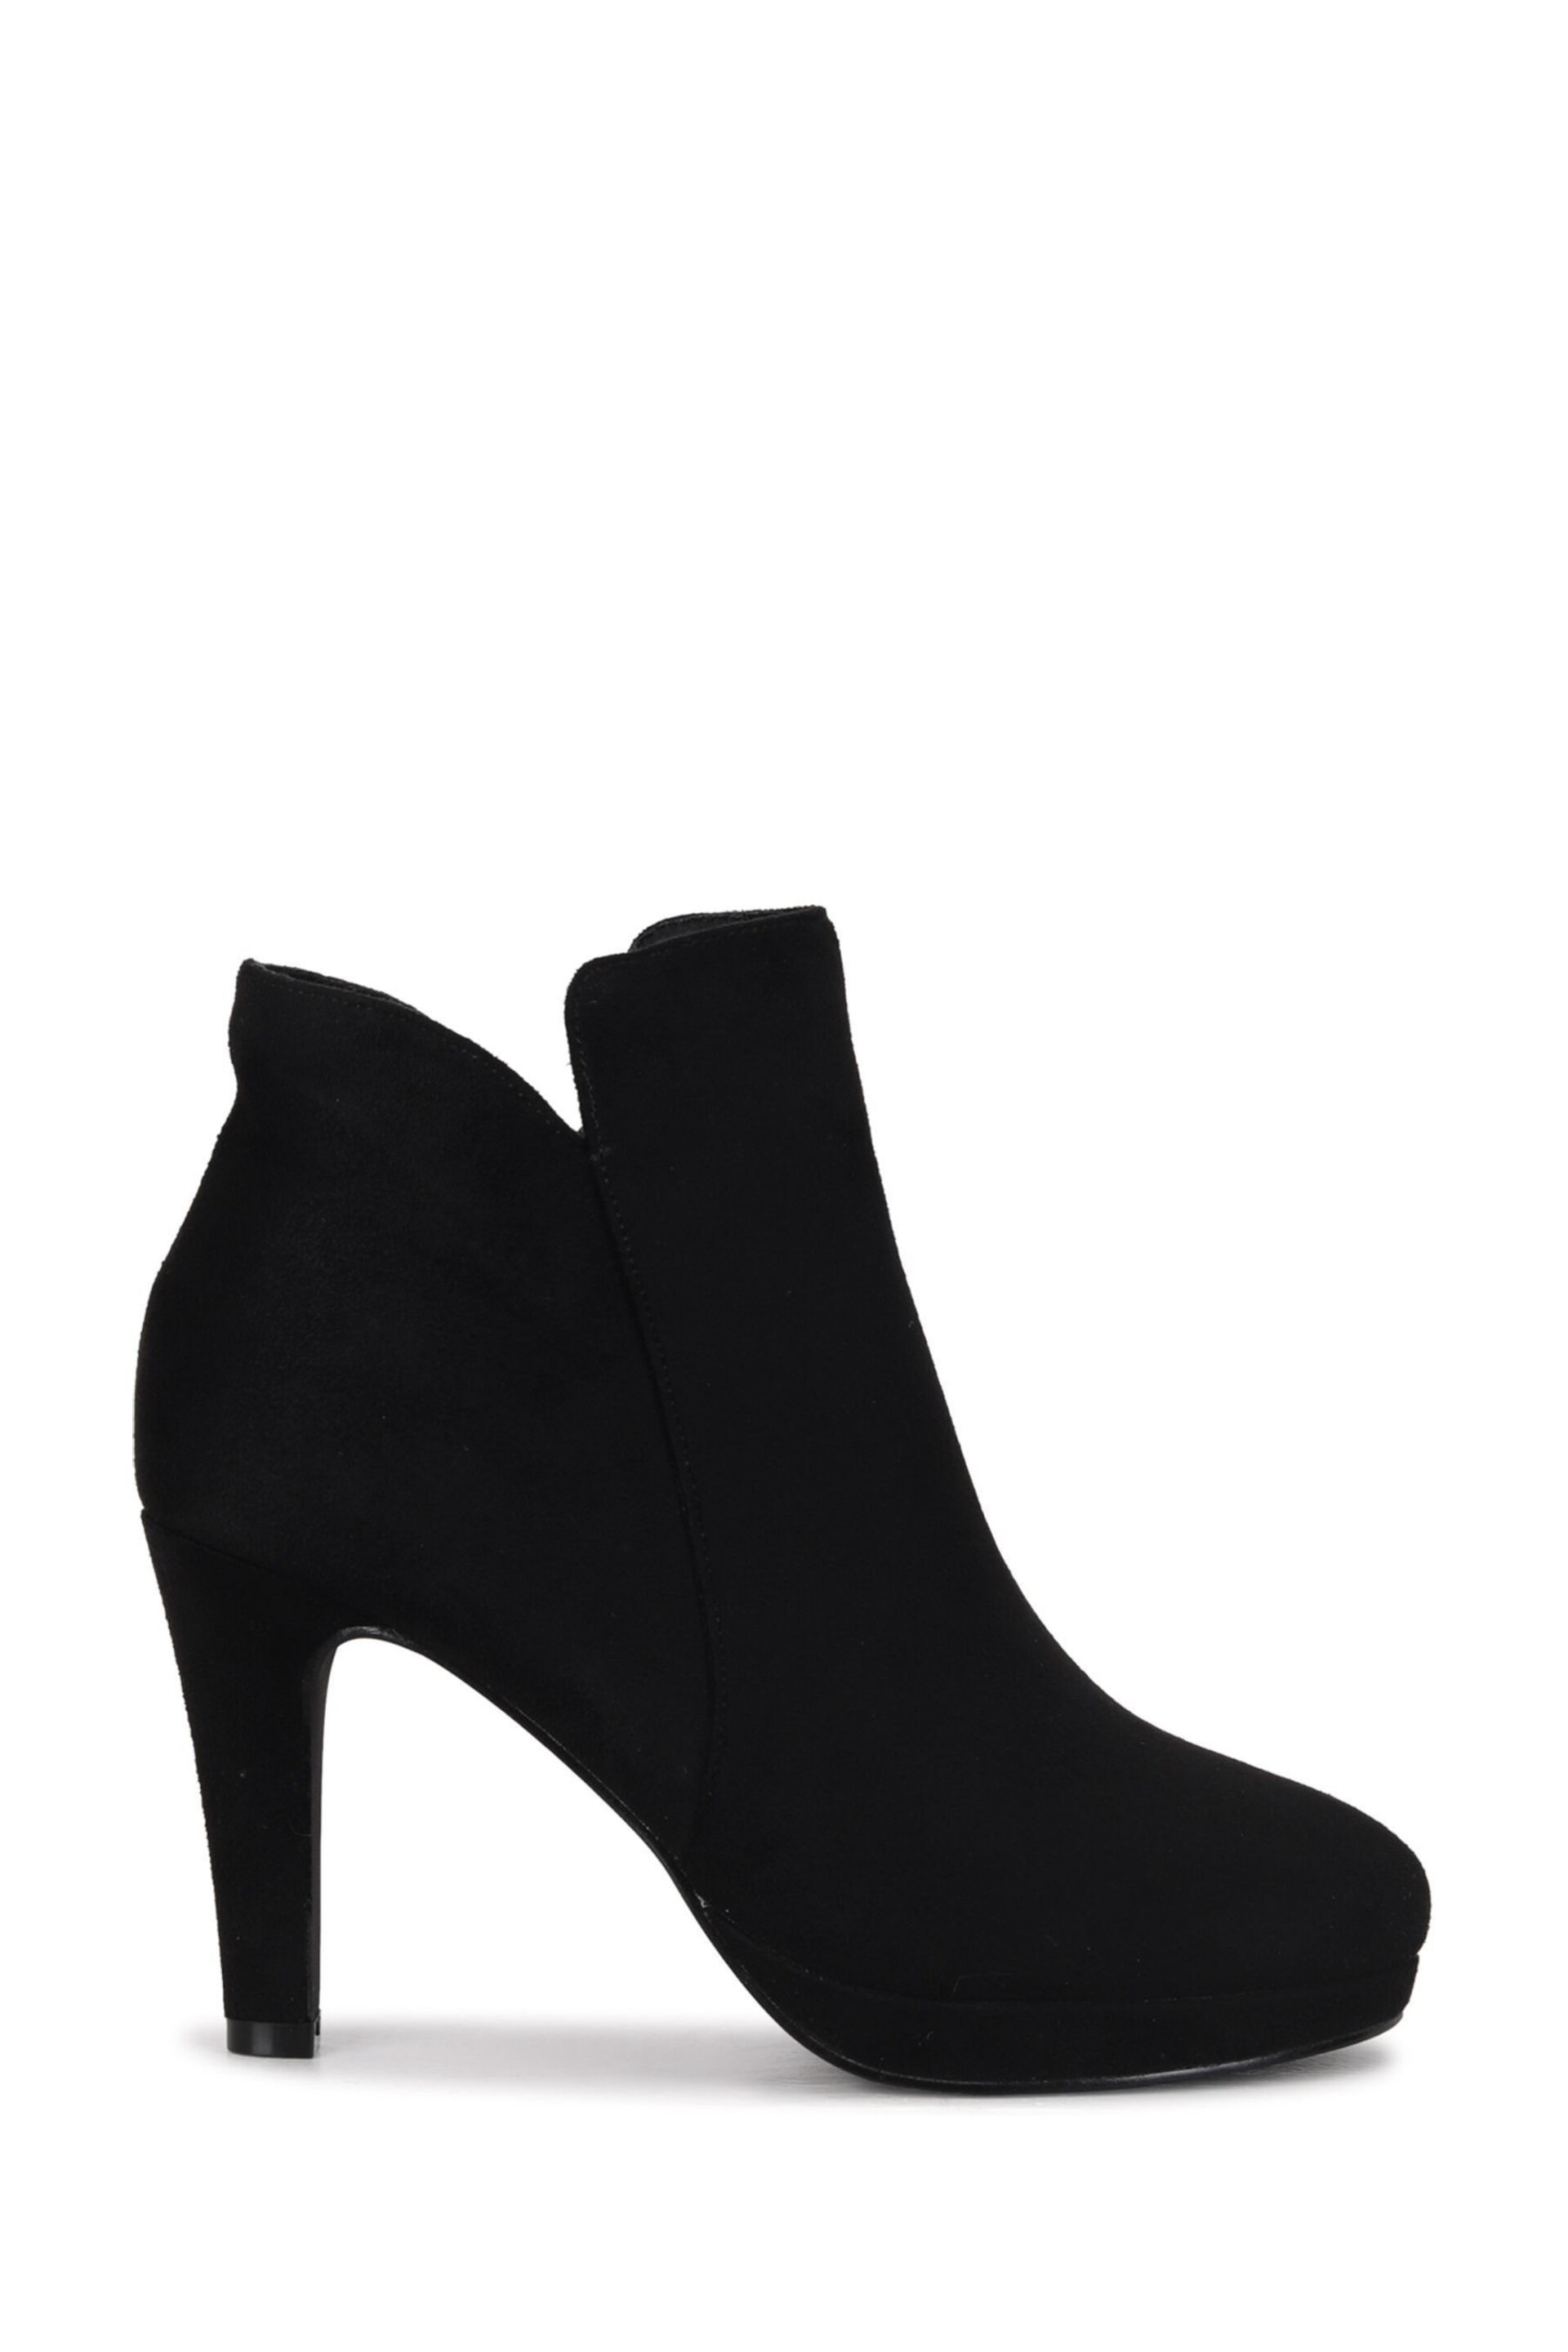 Linzi Black Layara Platform Ankle Boots With Stiletto Heels - Image 2 of 4